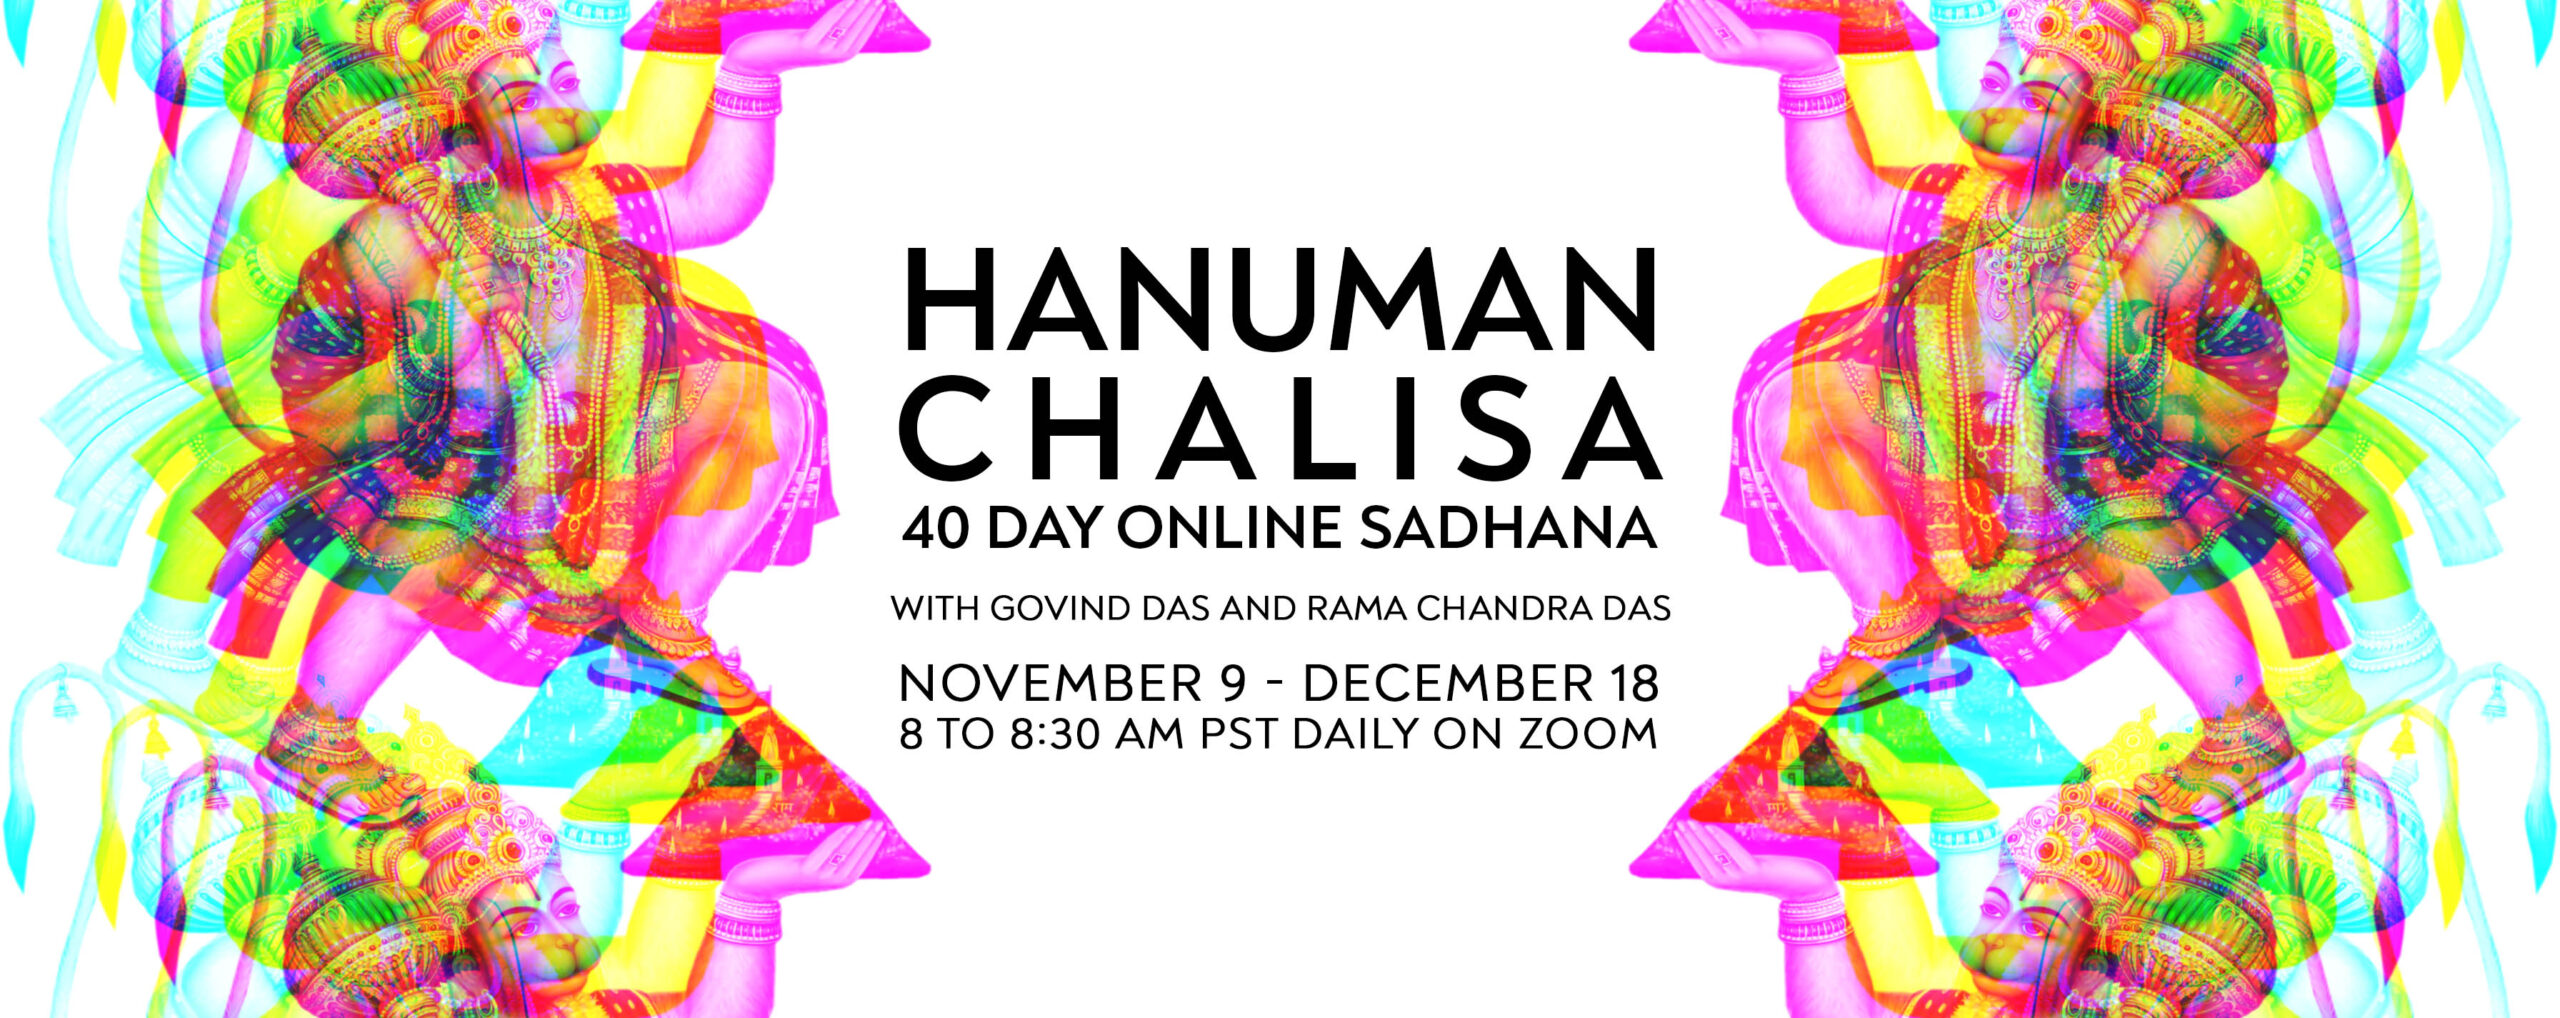 Hanuman Chalisa 40 Day Online Sadhana